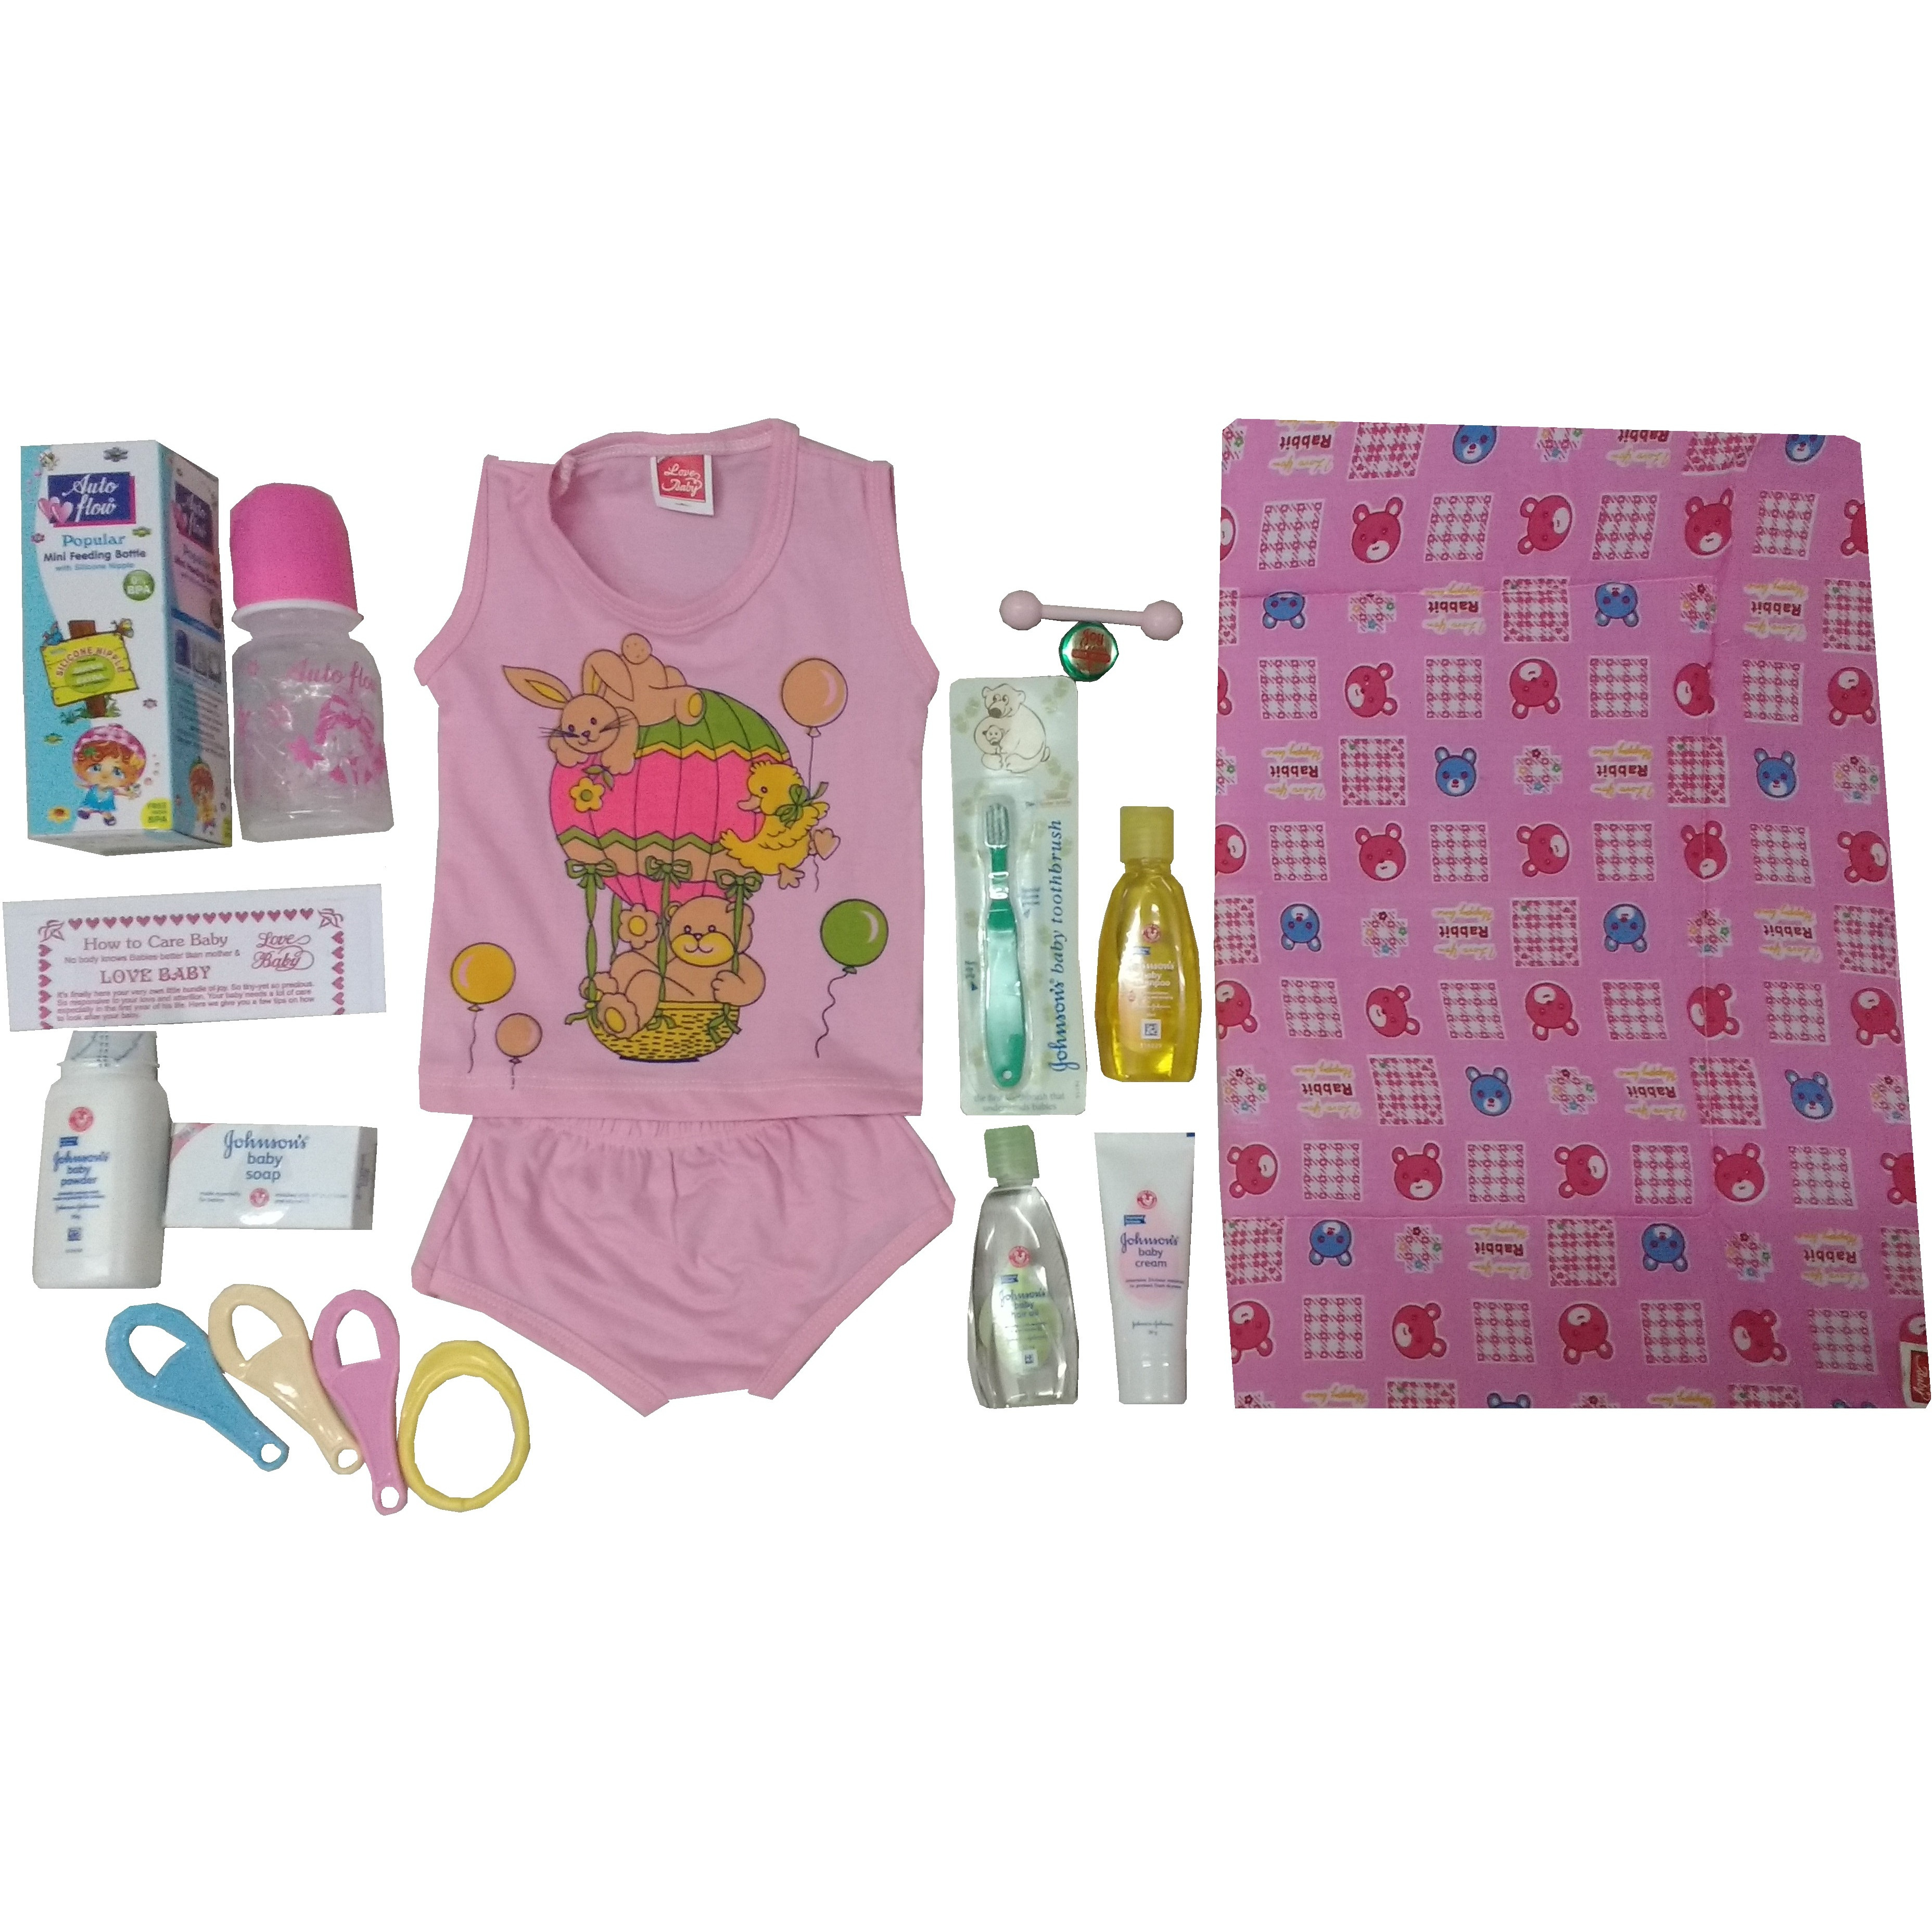 Love Baby Gift Set - Premium Pink